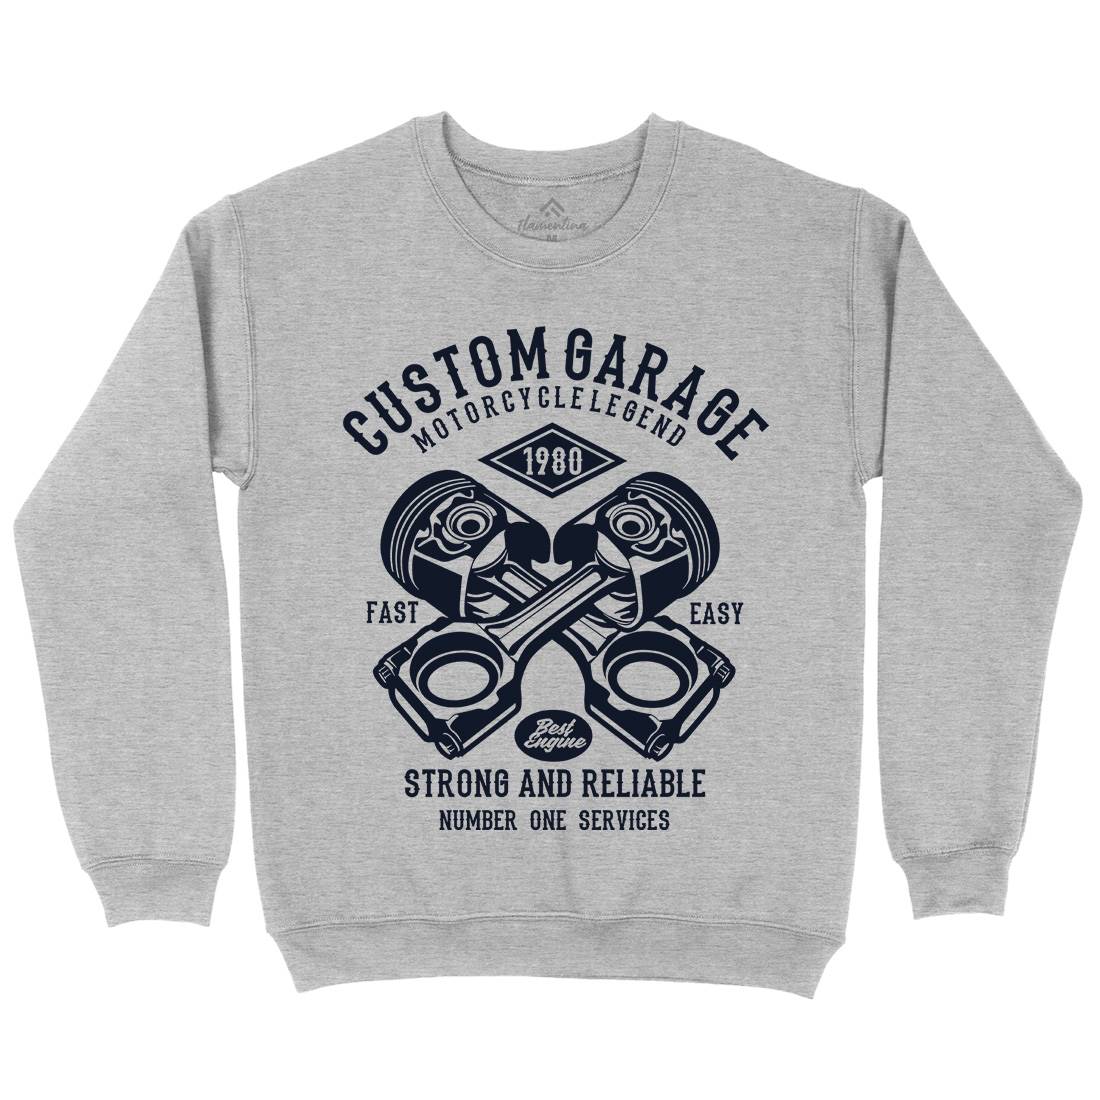 Custom Garage Kids Crew Neck Sweatshirt Cars B198